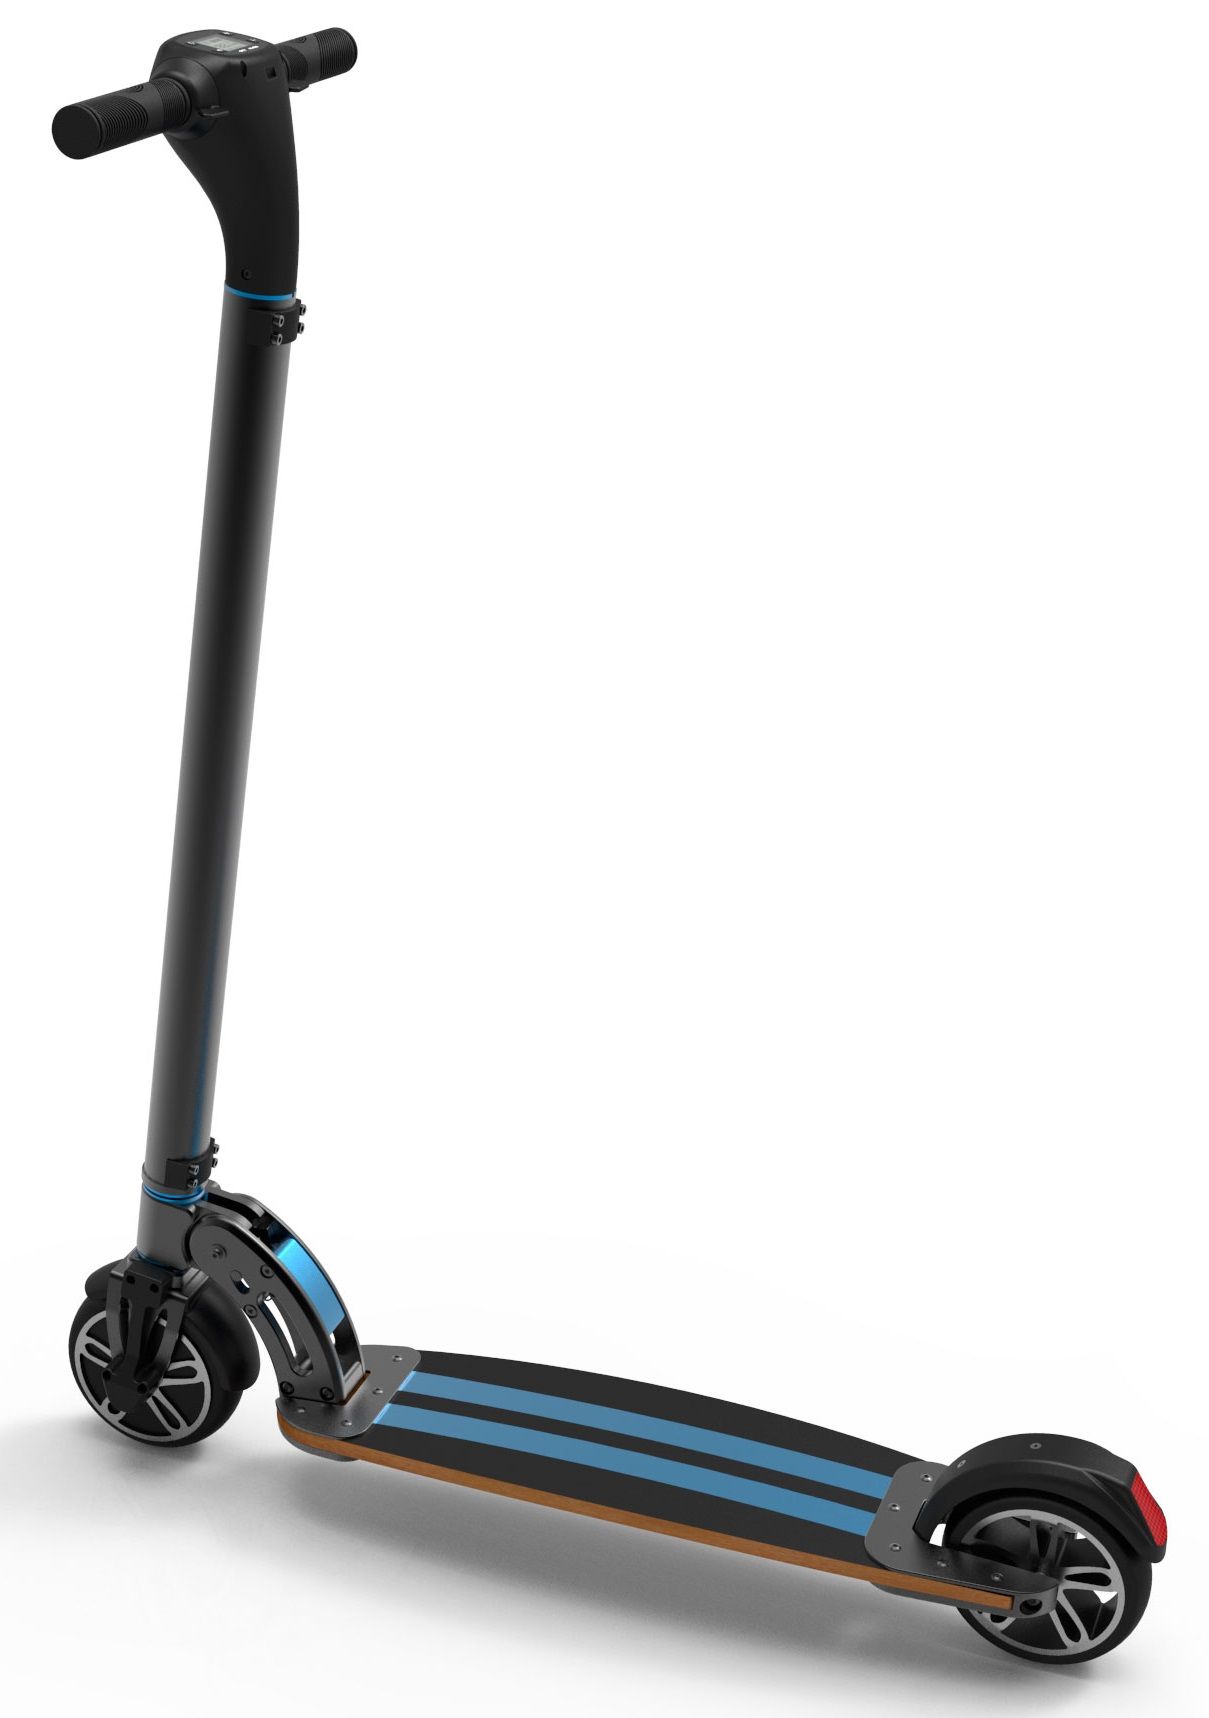  Самокат Playshion Smart Electric Scooter 2018